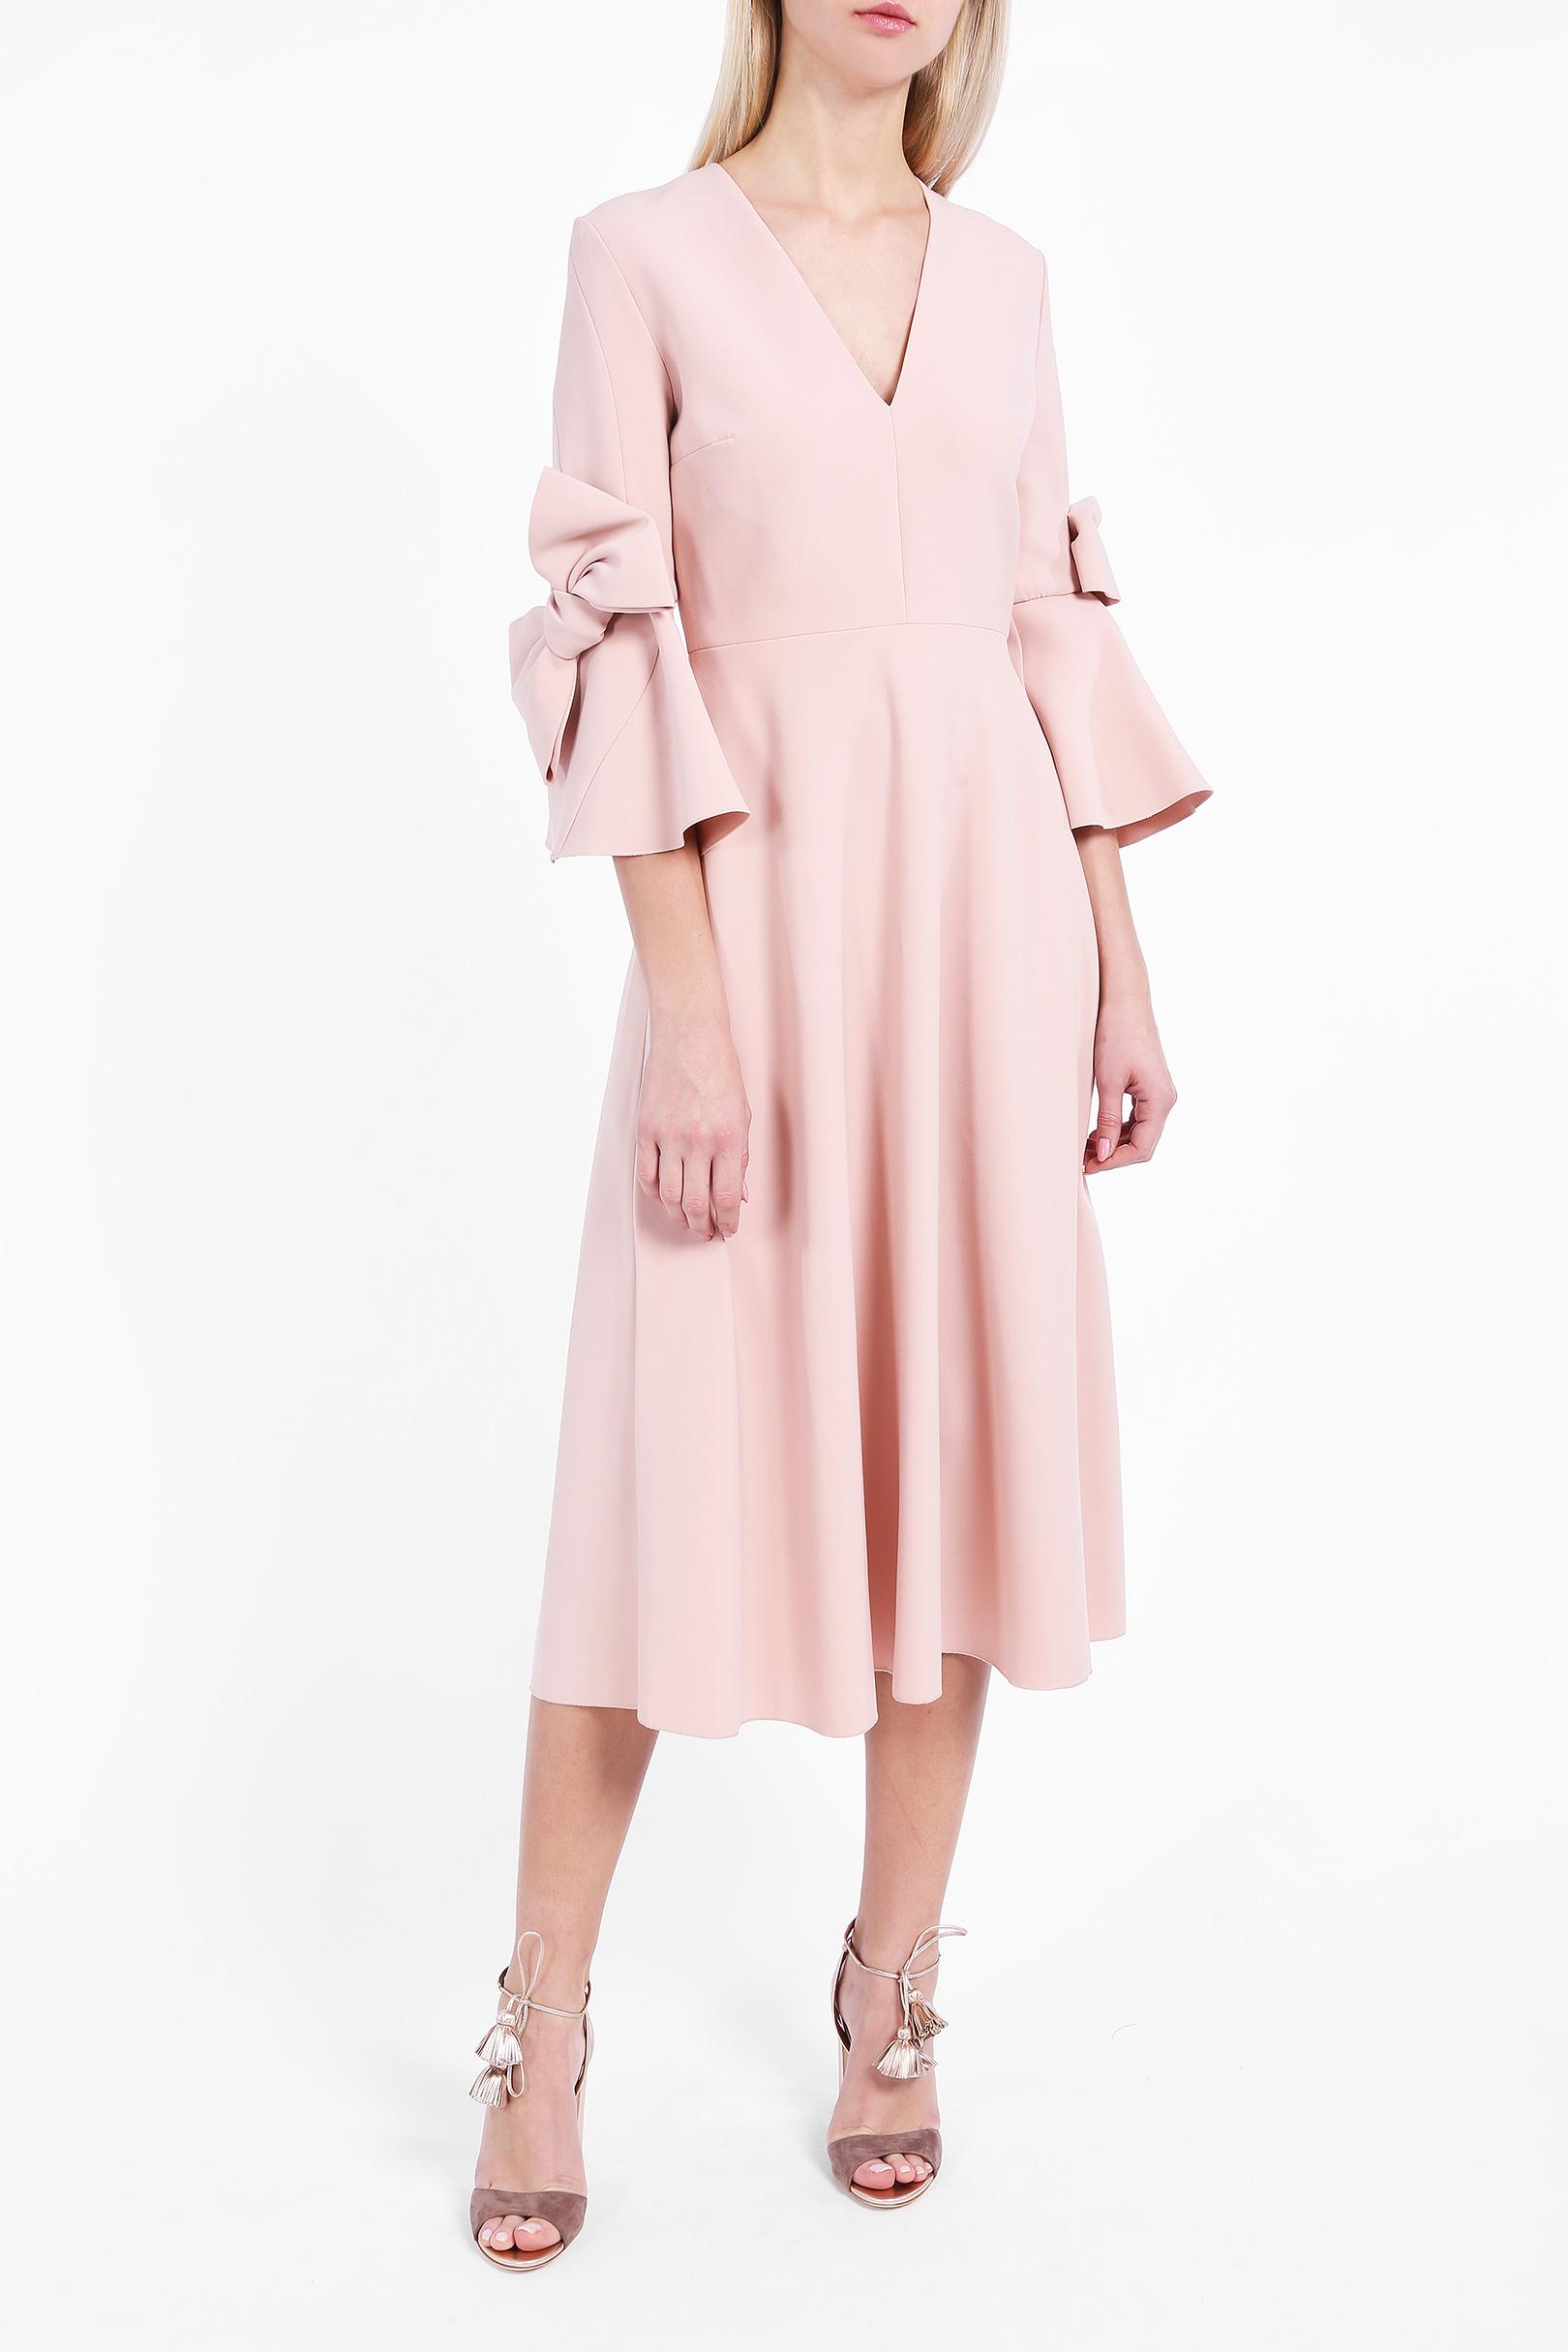 Lyst - Roksanda Sibella Dress in Pink